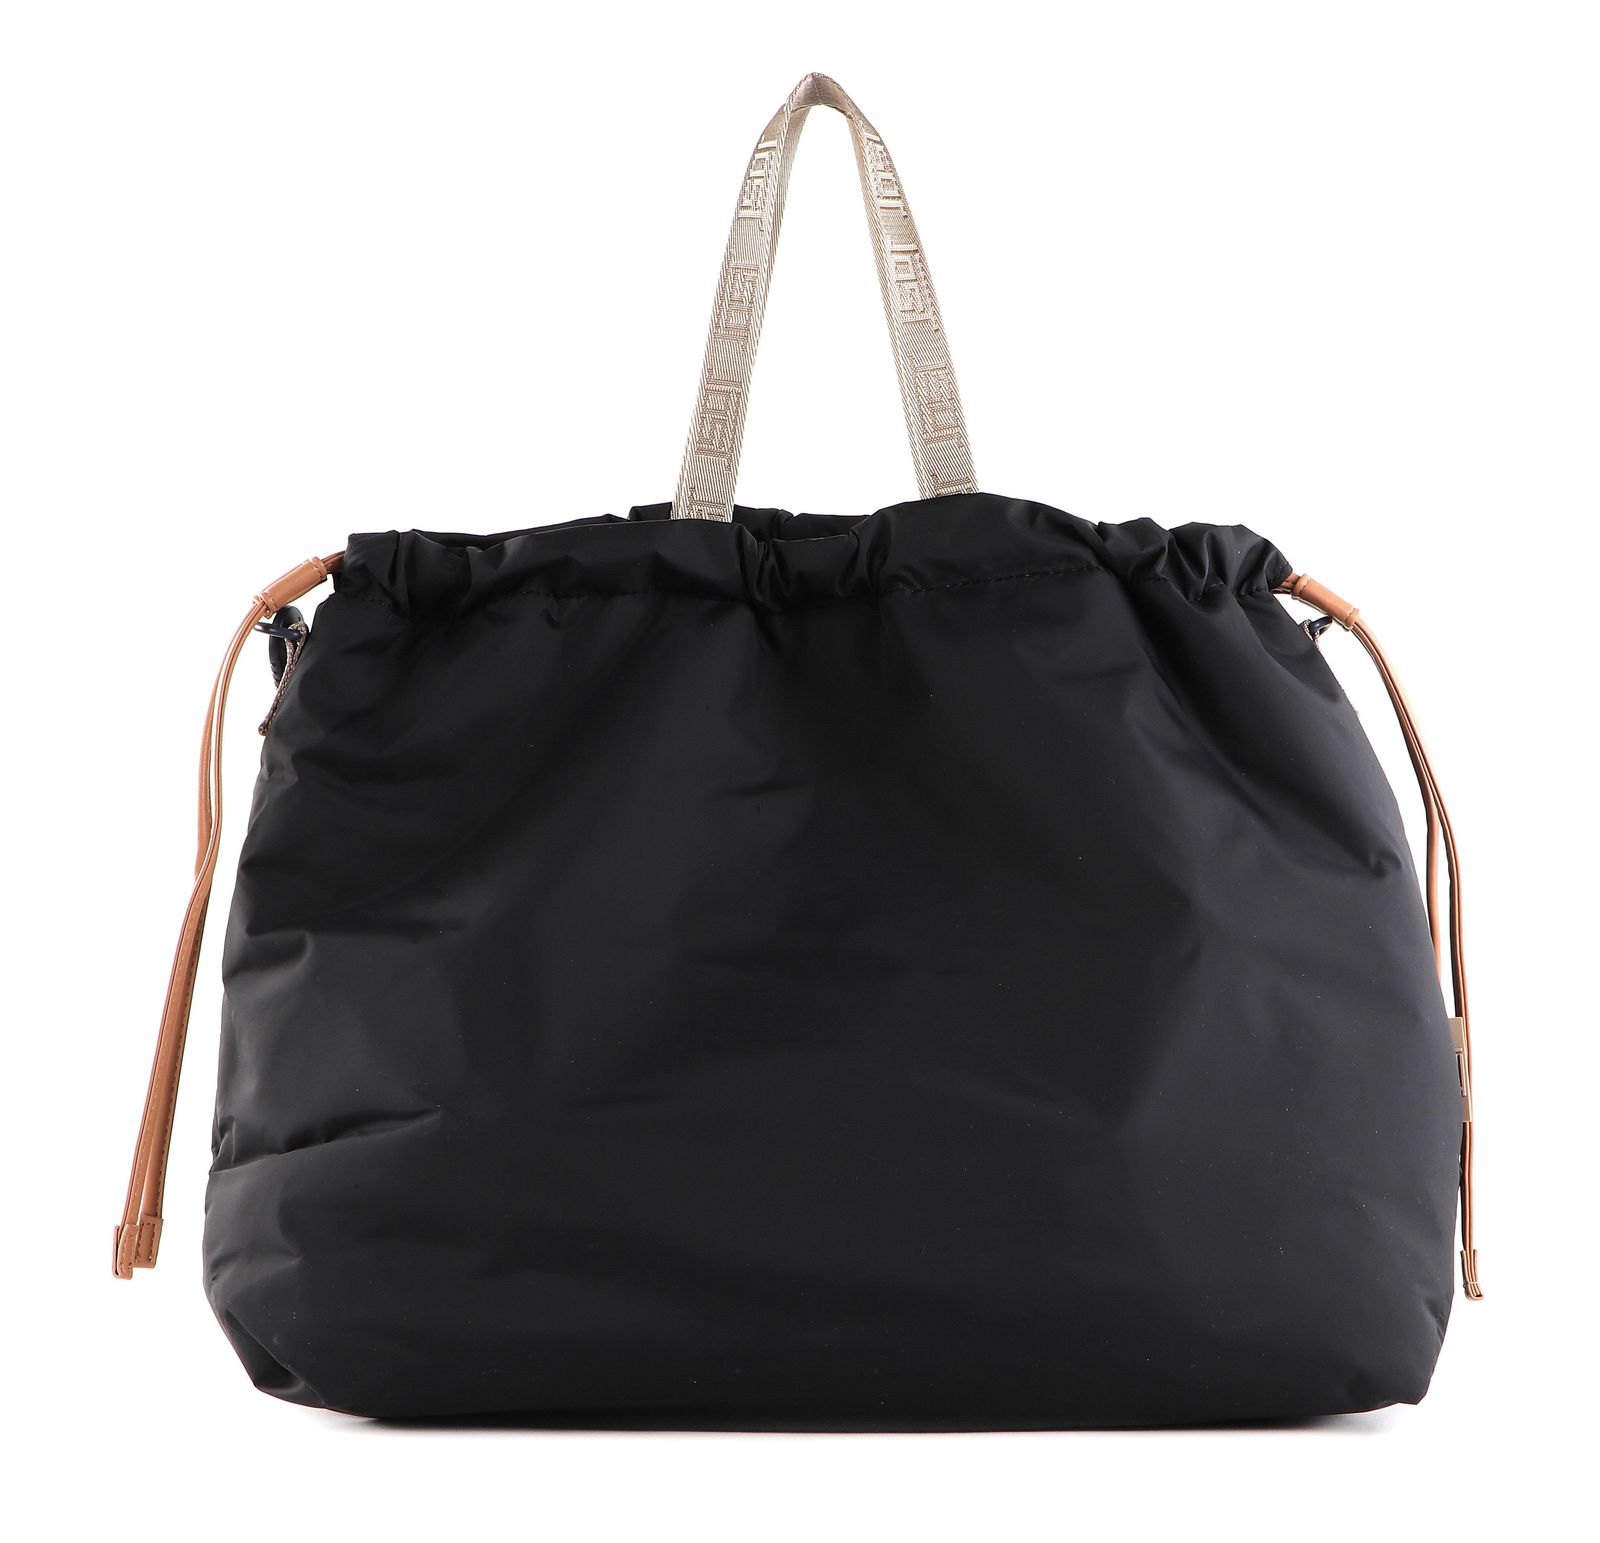 JOST shoulder bag Kemi Hobo Bag Black | Buy bags, purses & accessories ...